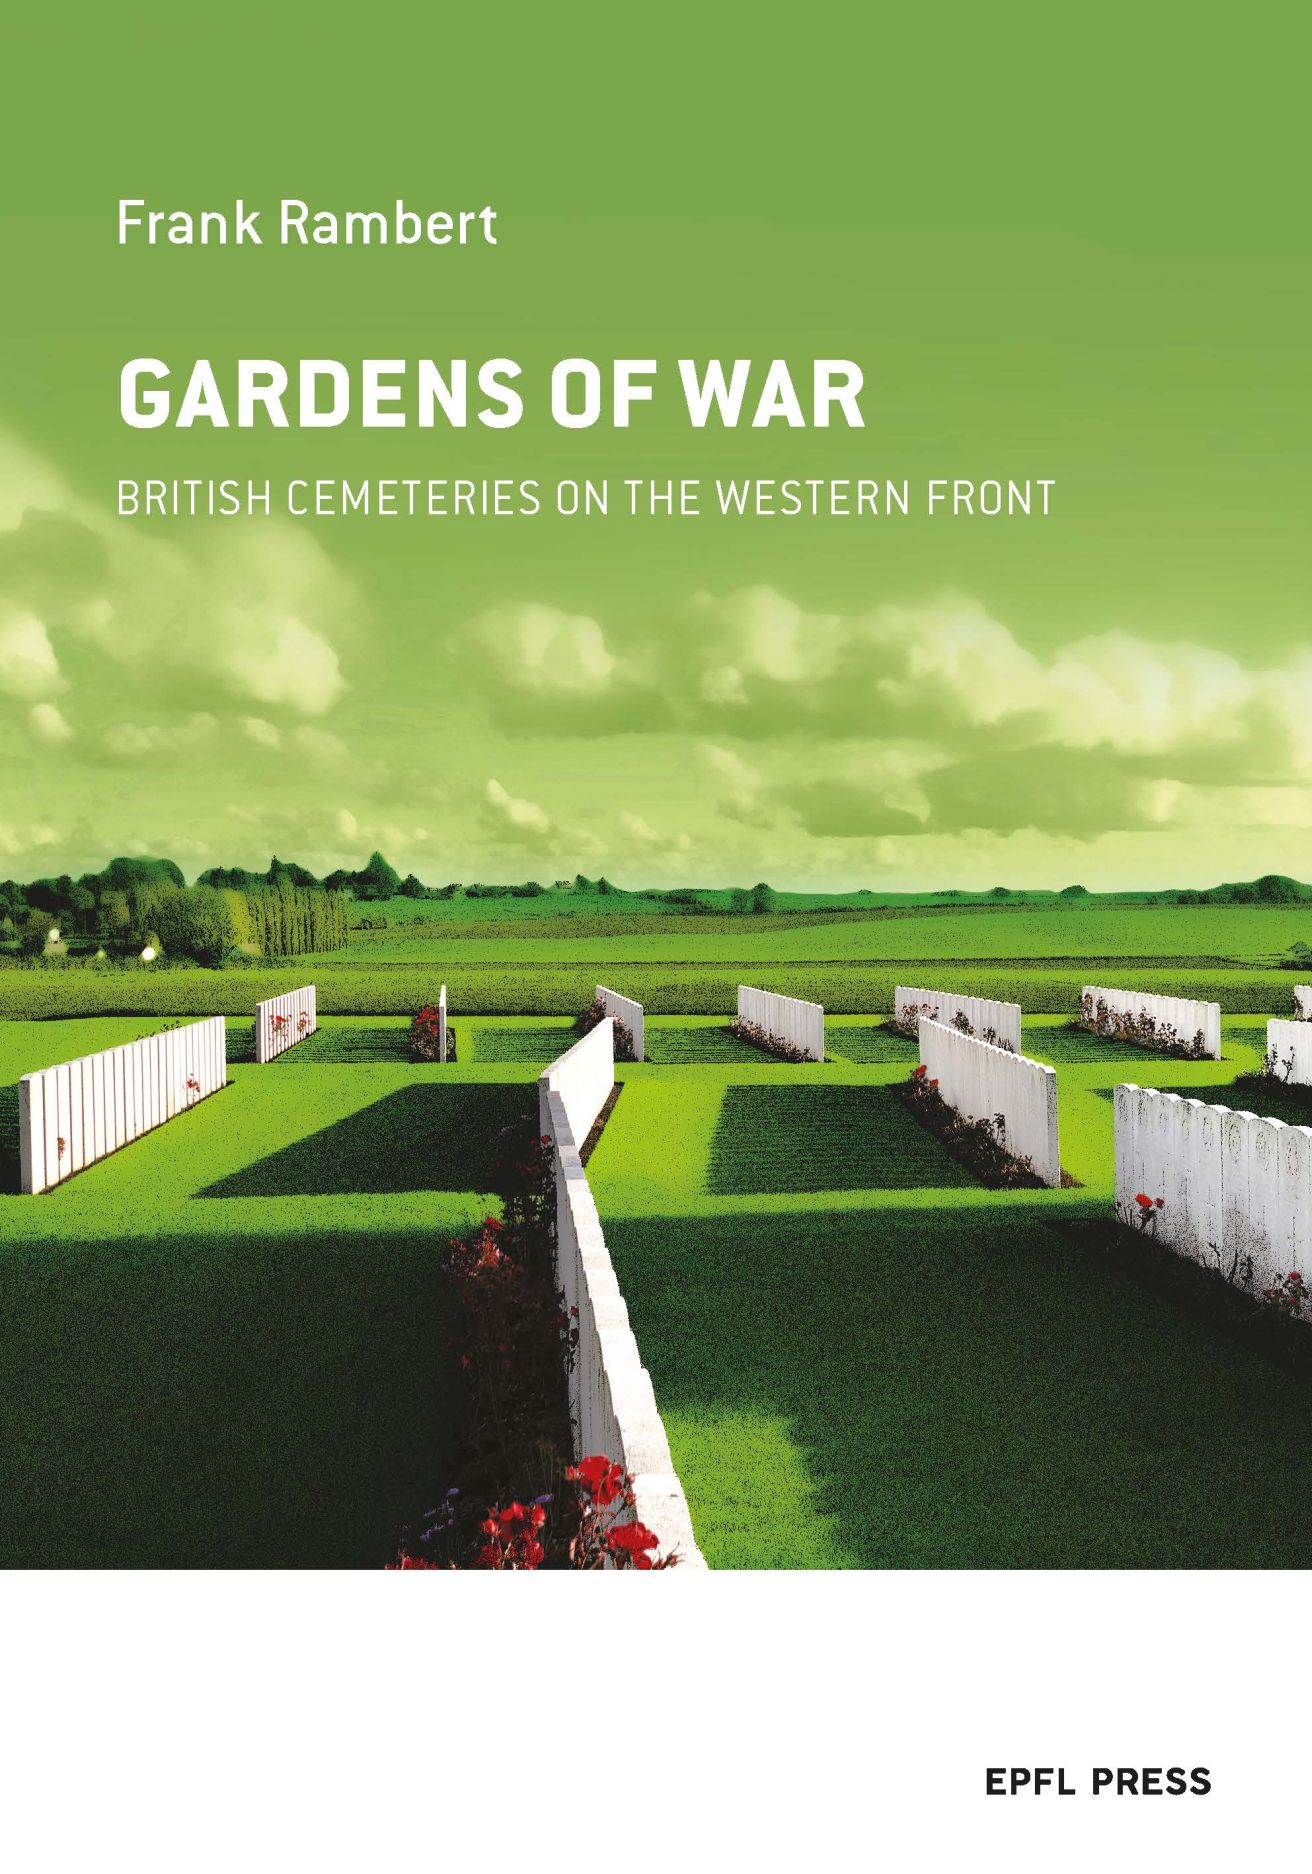 Gardens of War: British Cemeteries on the Western Front